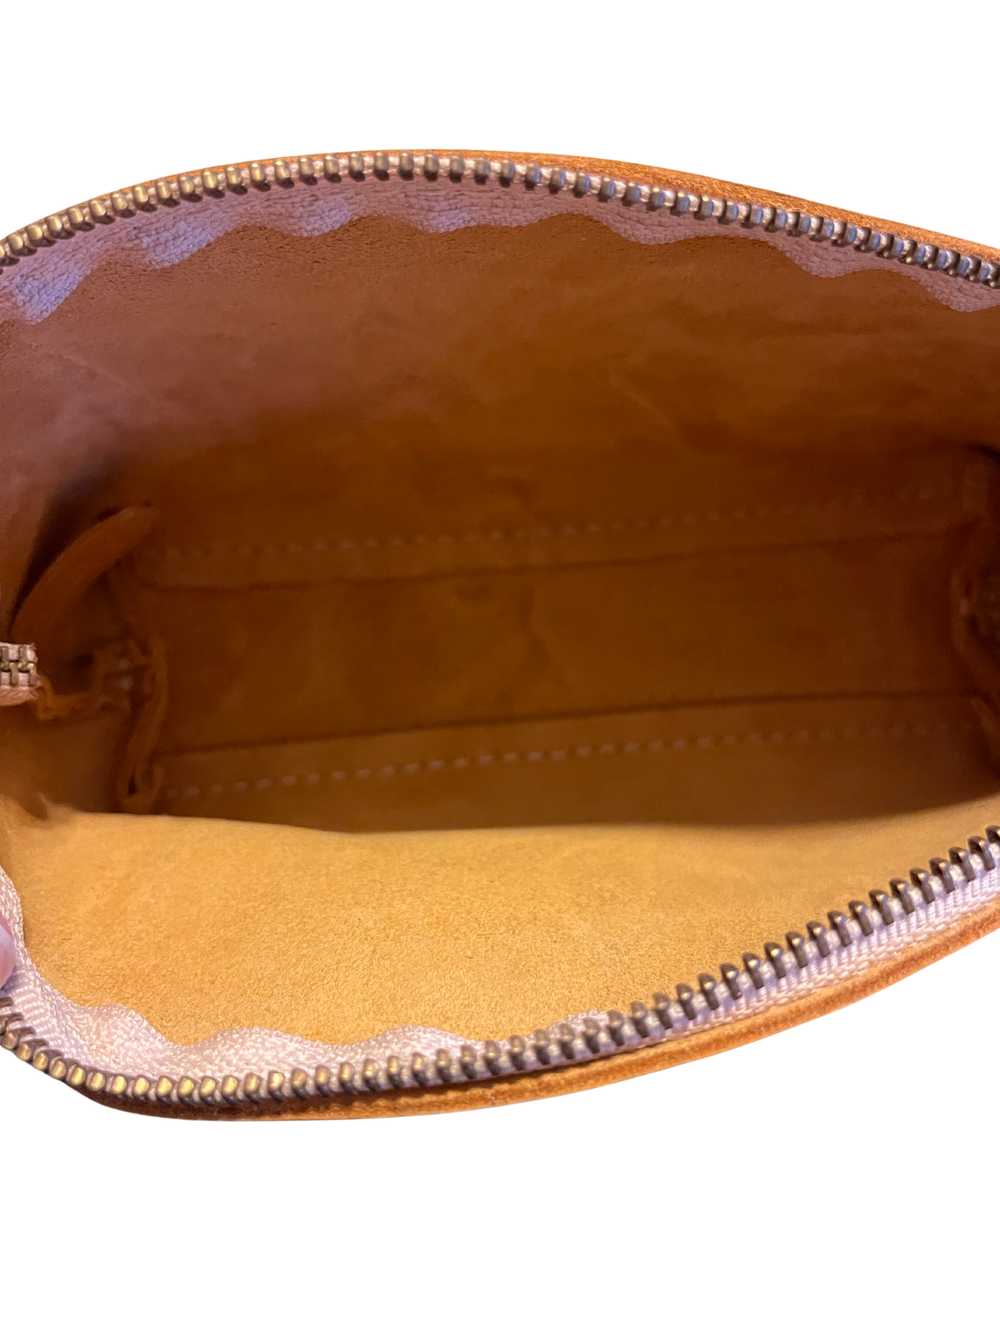 Portland Leather Eclipse Makeup Bag - image 4